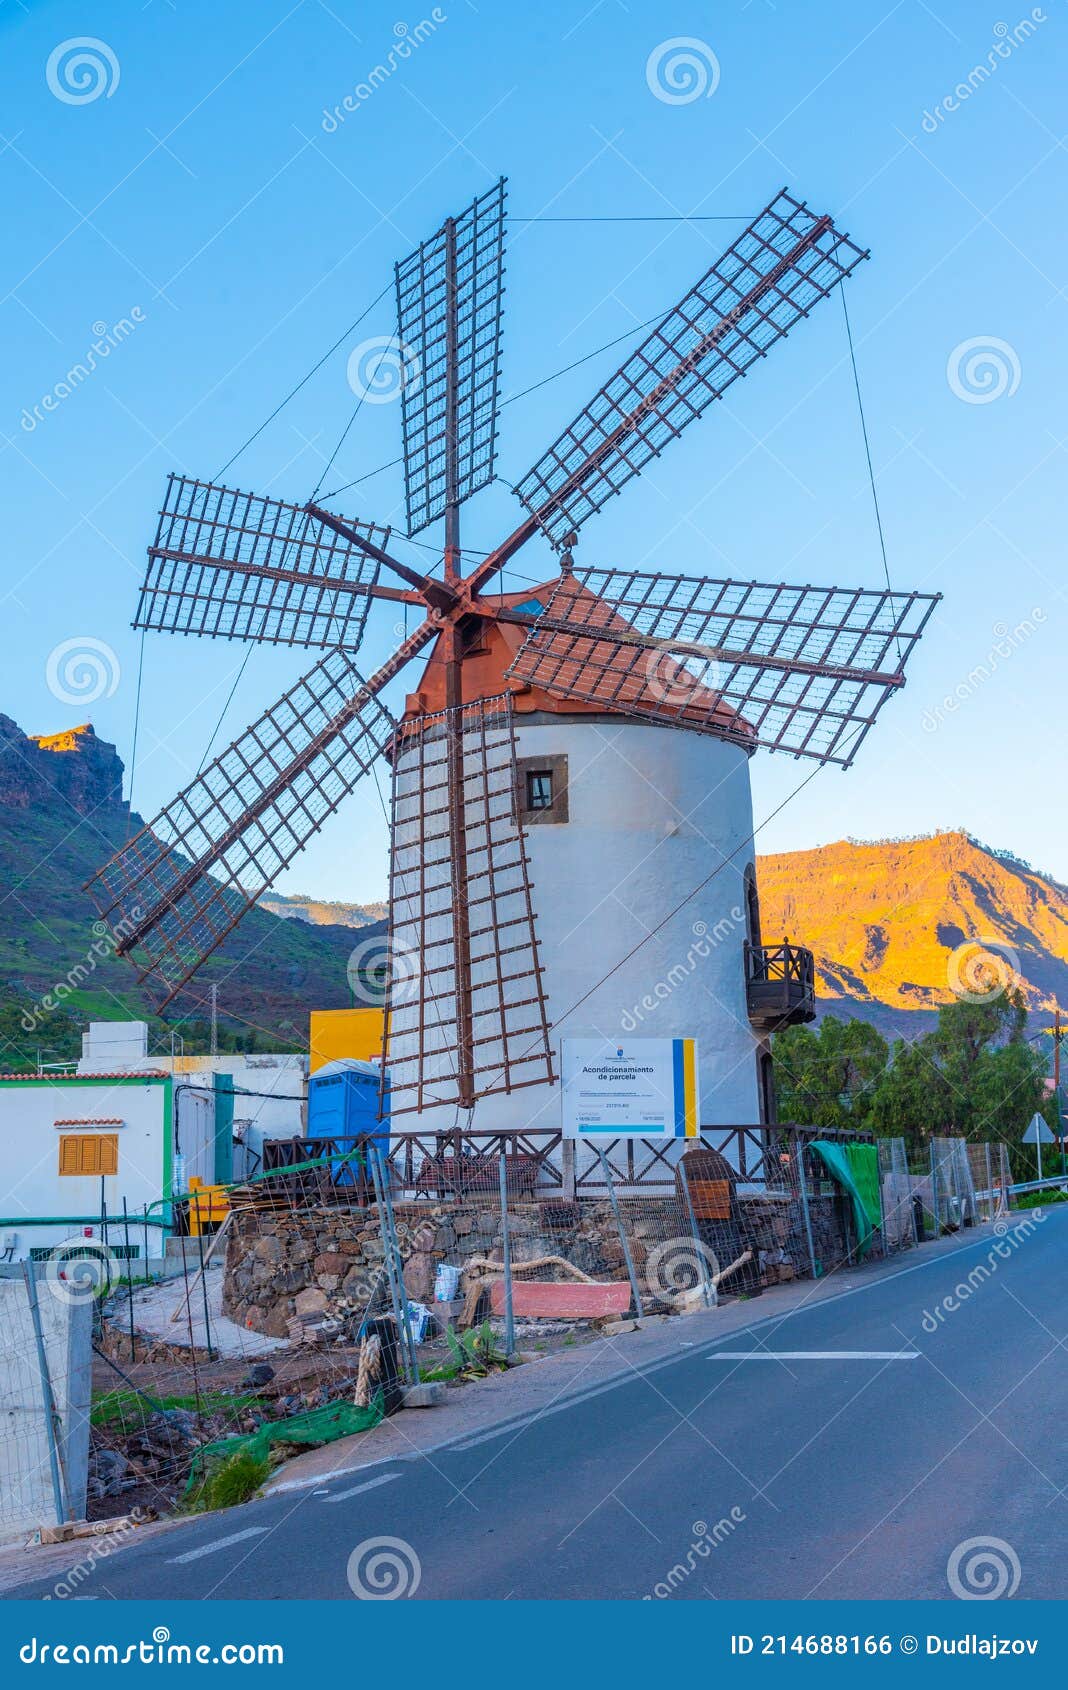 windmill at mogan, gran canaria, canary islands, spain